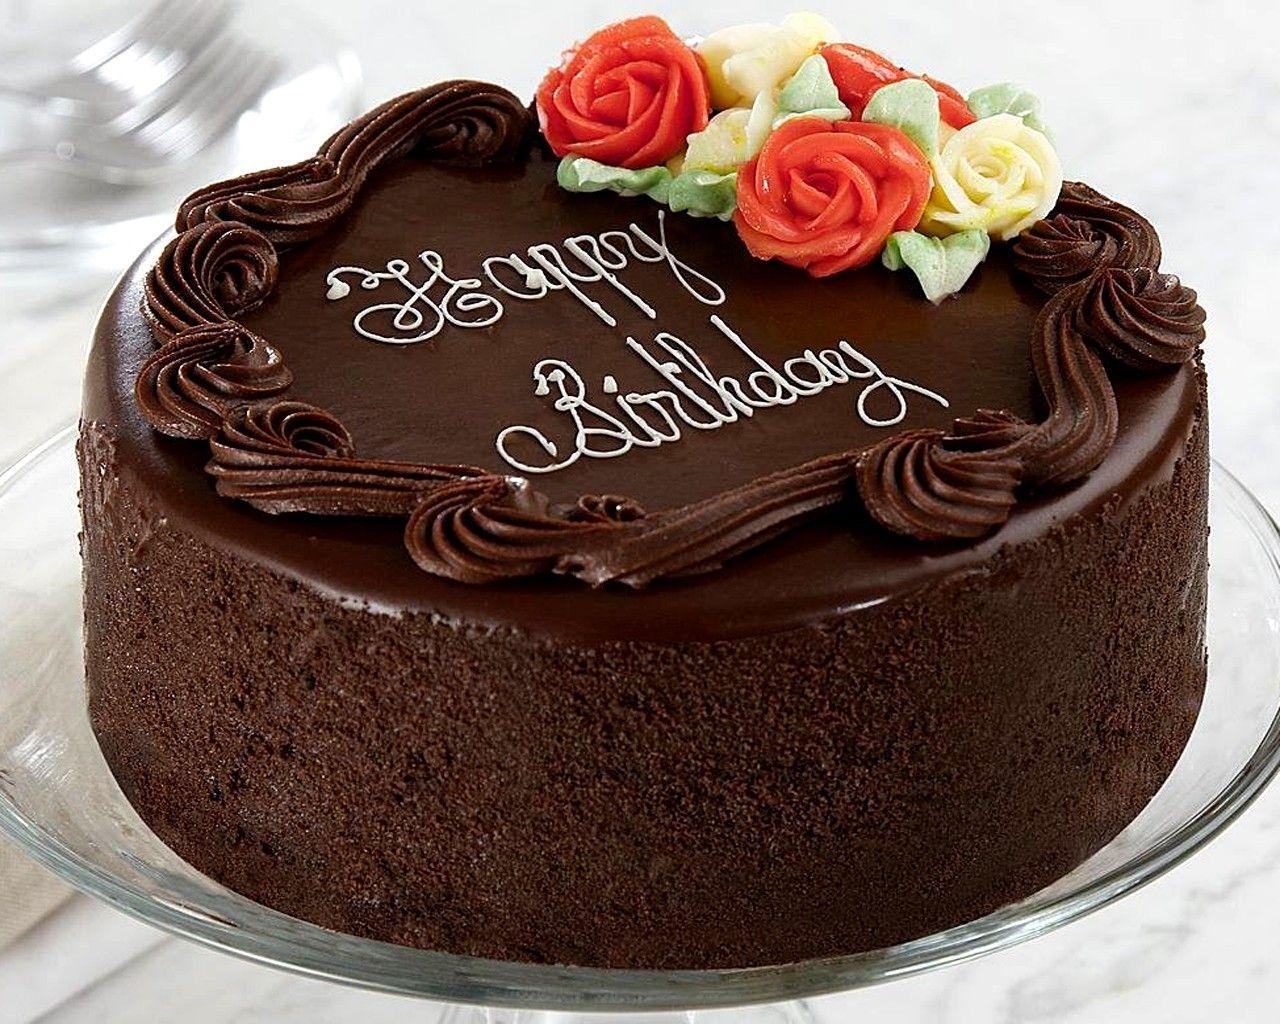 Birthday Cake Image Download